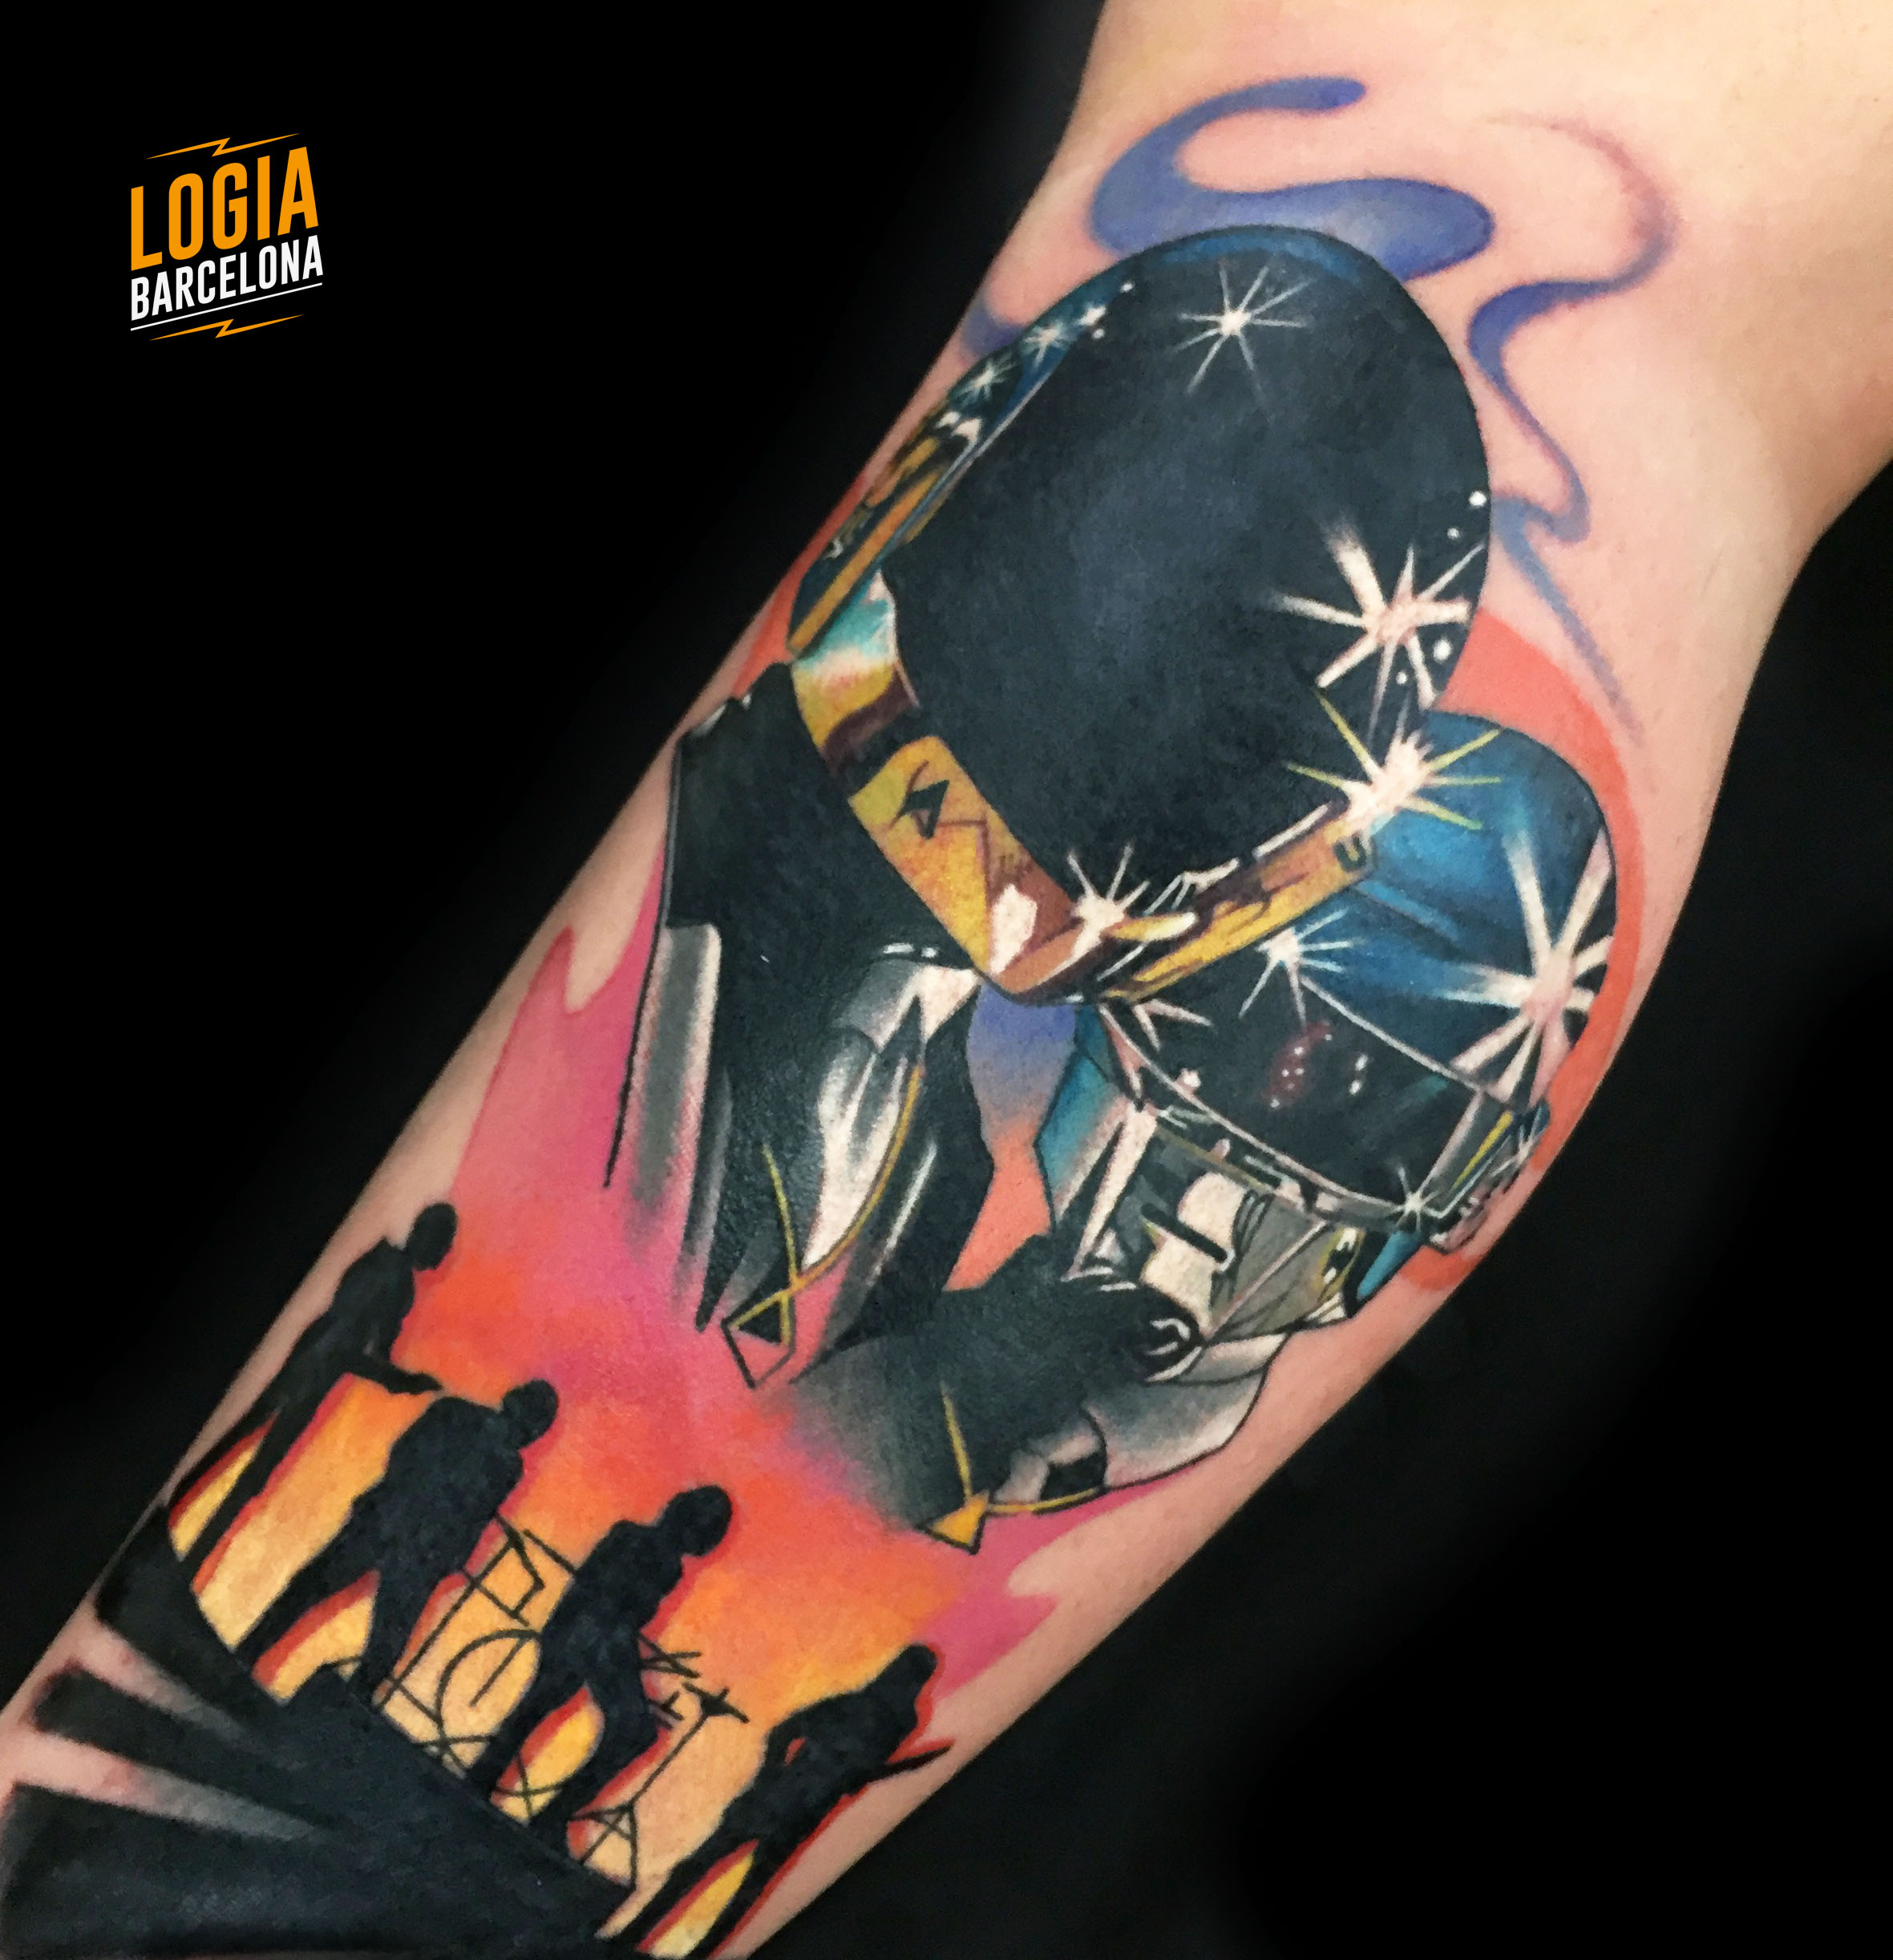 Tatuaje Daft Punk Musica Leonardo Castañeda Logia Barcelona